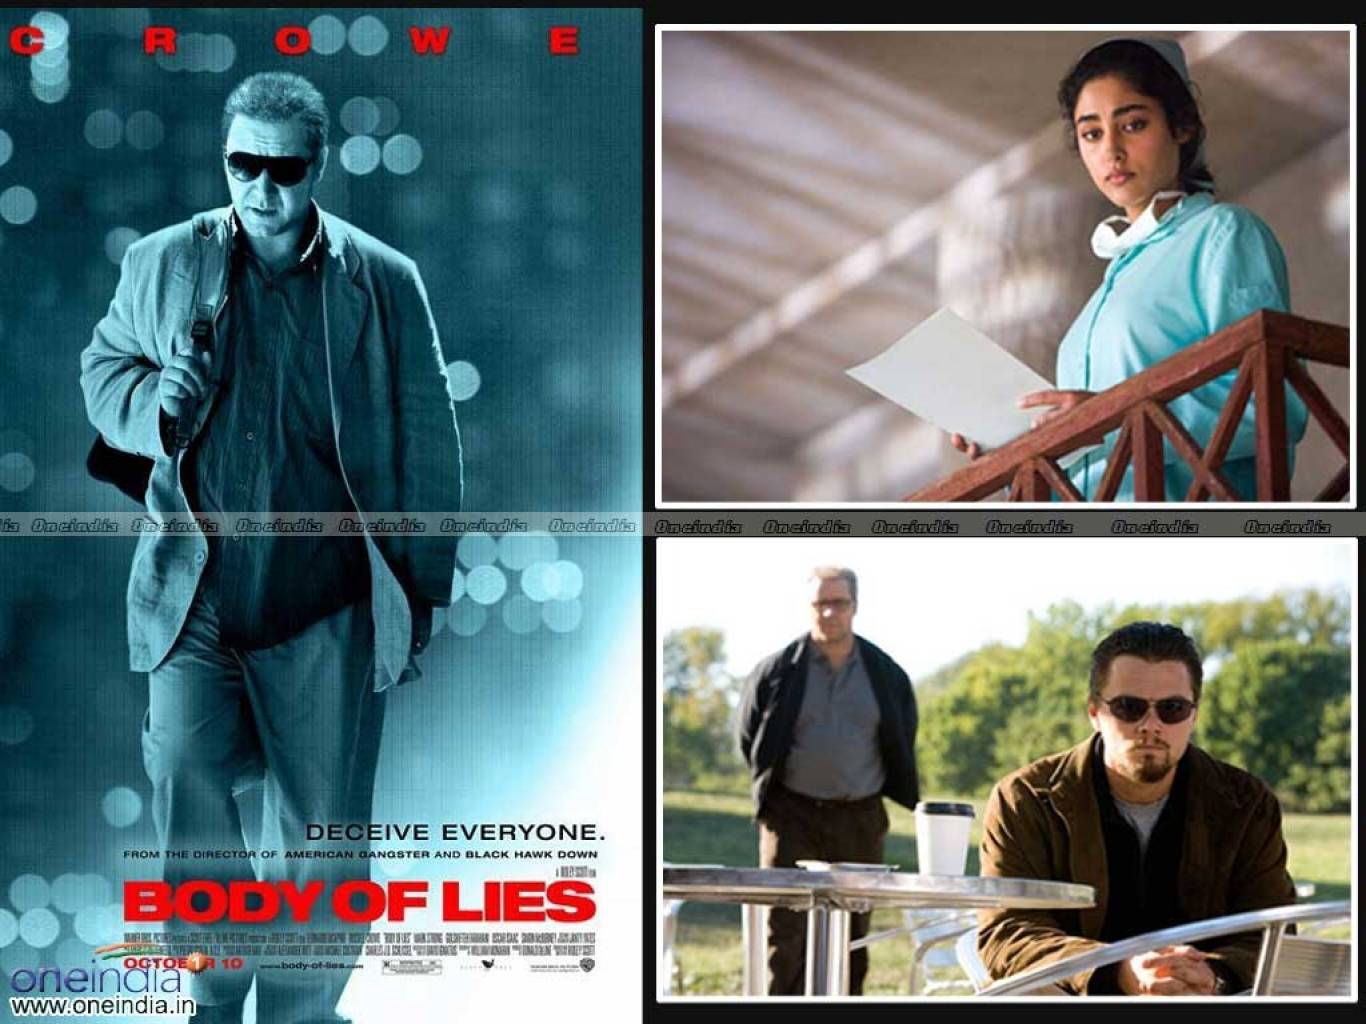 Body of Lies Movie HD Wallpaper. Body of Lies HD Movie Wallpaper Free Download (1080p to 2K)